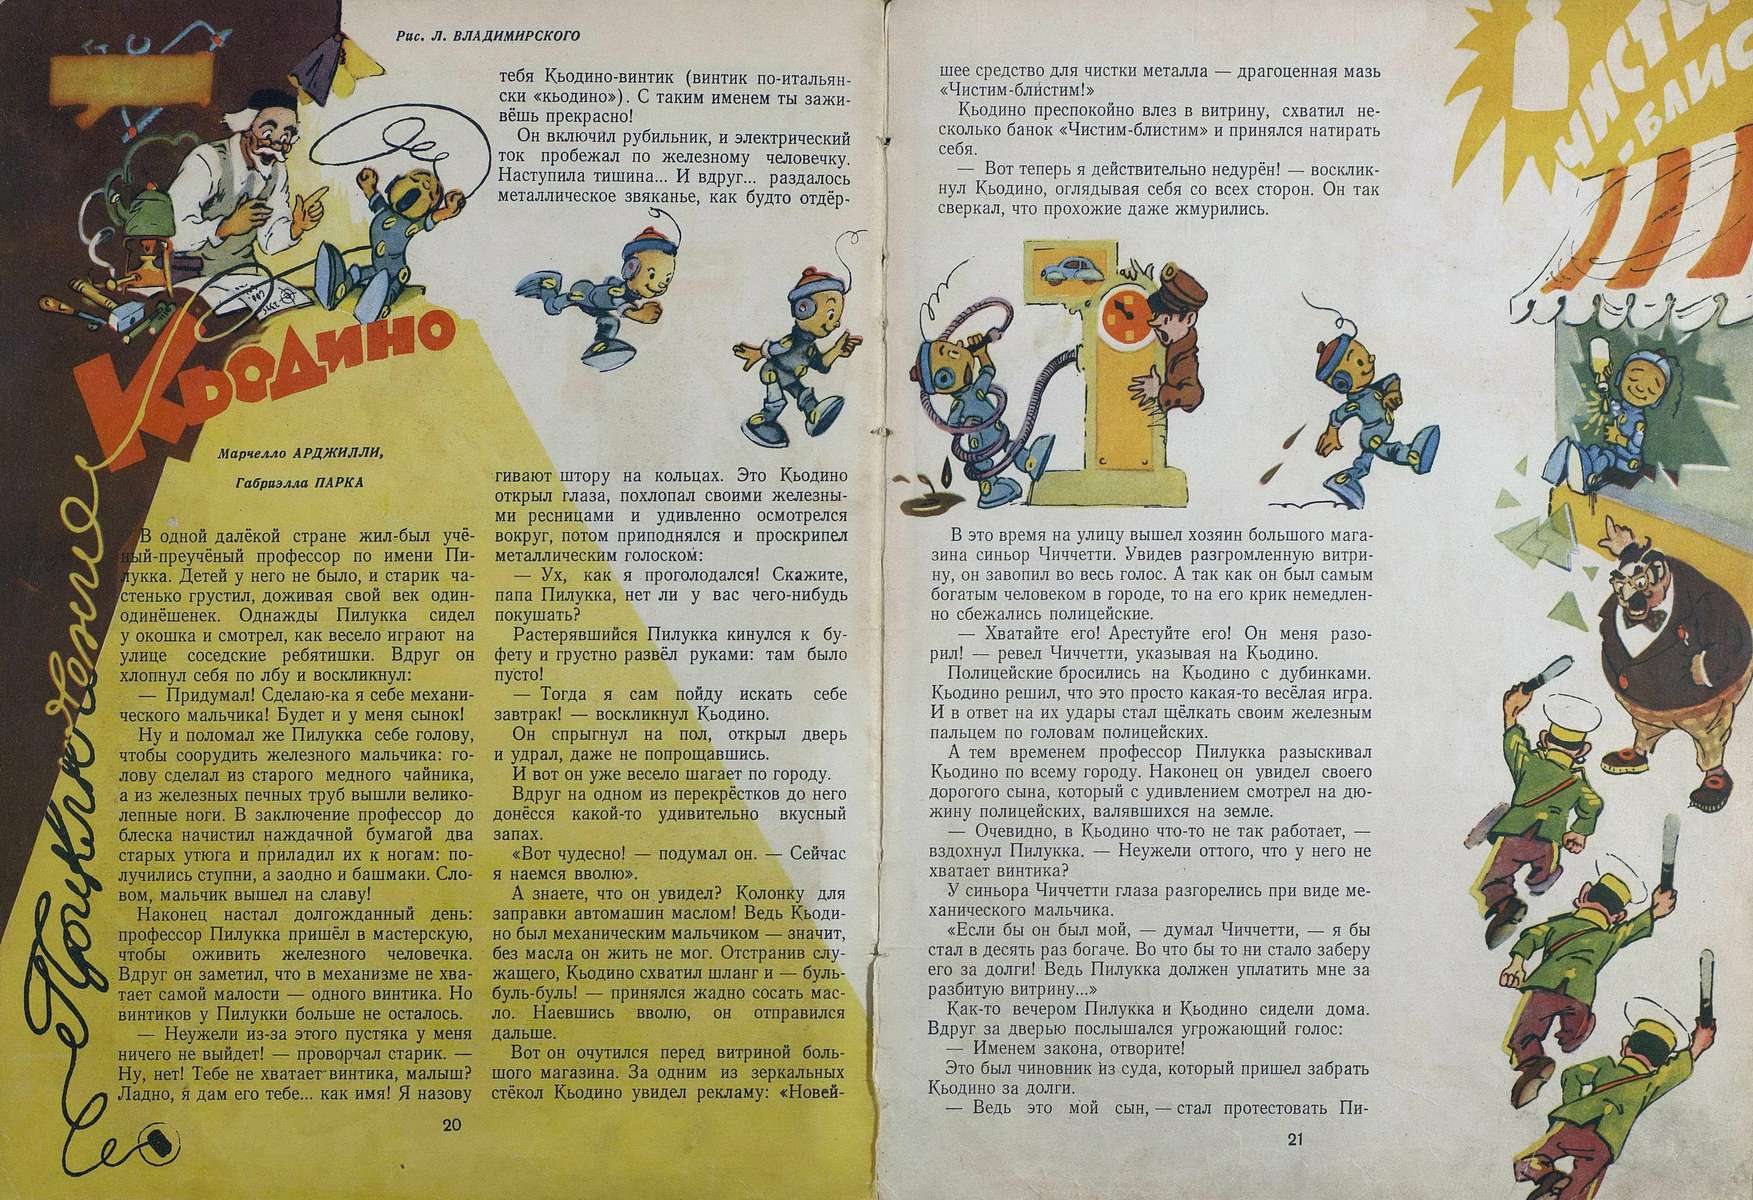 Приключения Кьодино. Мурзилка 1957-01, с.20-21.jpg